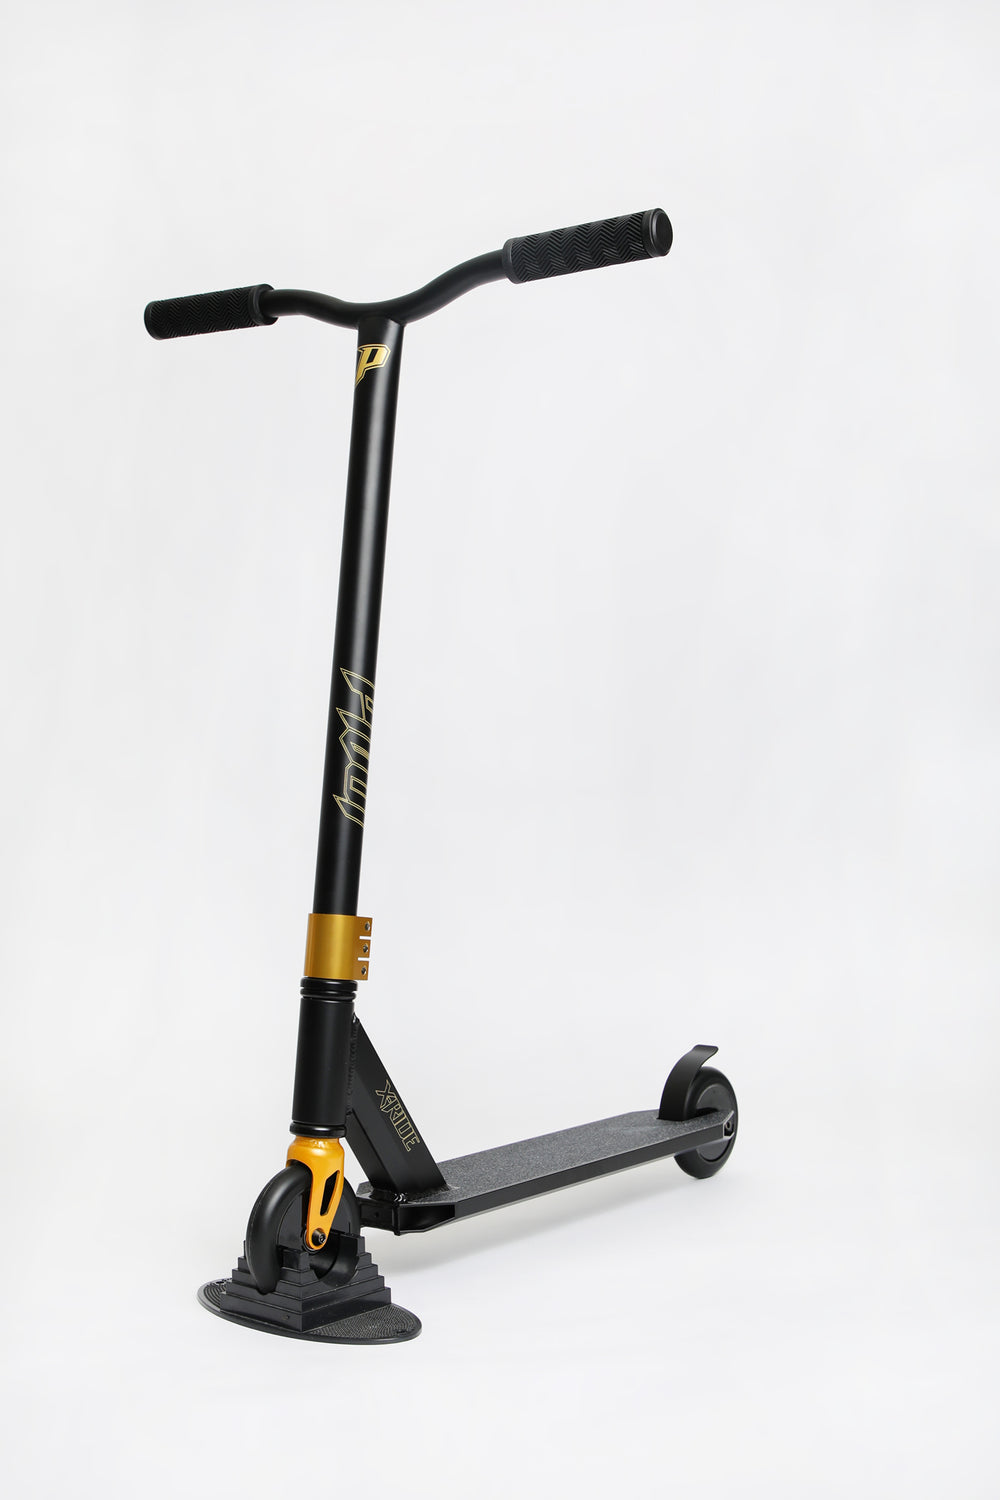 Pivot X-Ride Black & Gold Scooter Pivot X-Ride Black & Gold Scooter